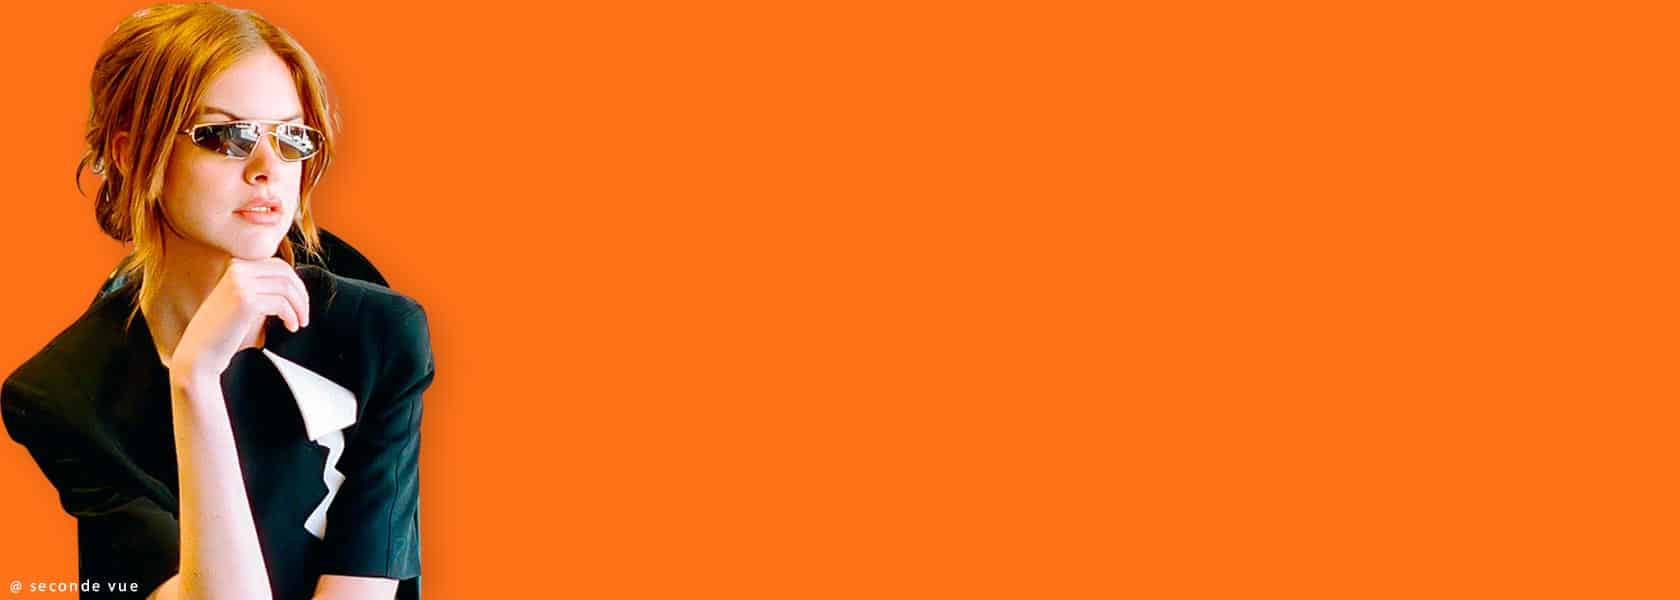 slider-seconde-vue-orange